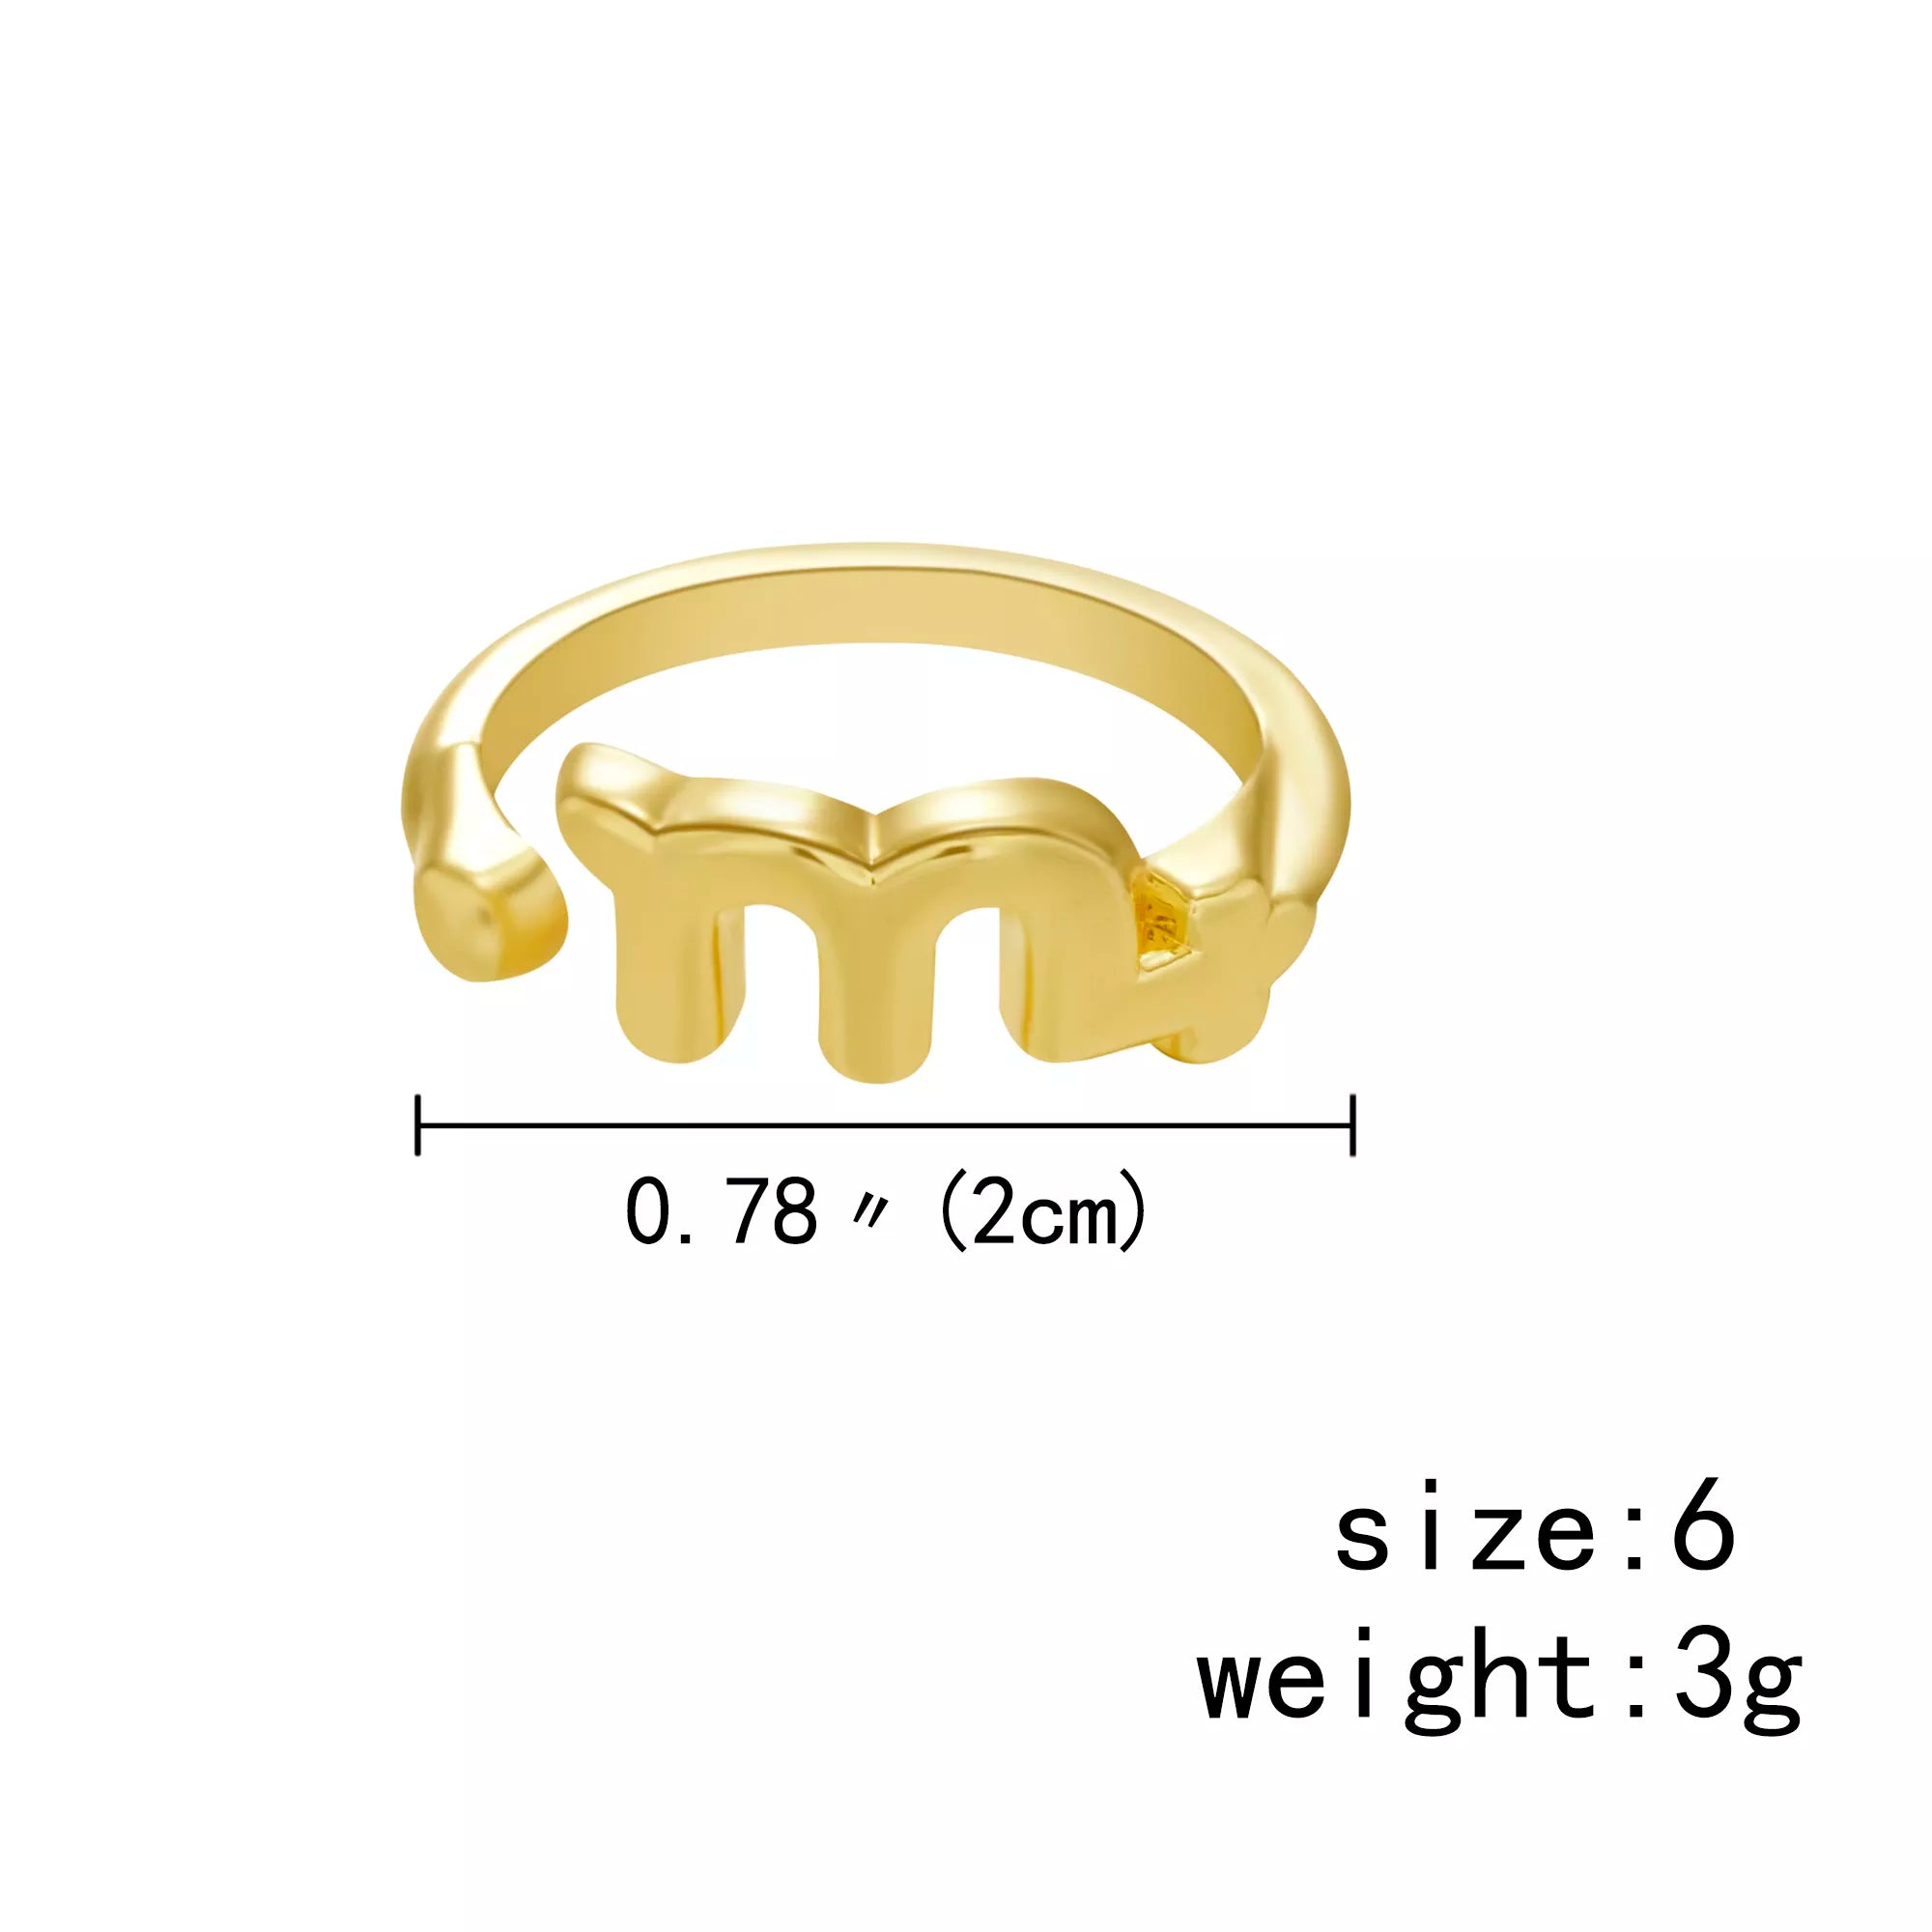 Taurus Gemini Cancer Leo Silver Zodiac Sign Diffuser Adjustable Ring Gift  Wrap